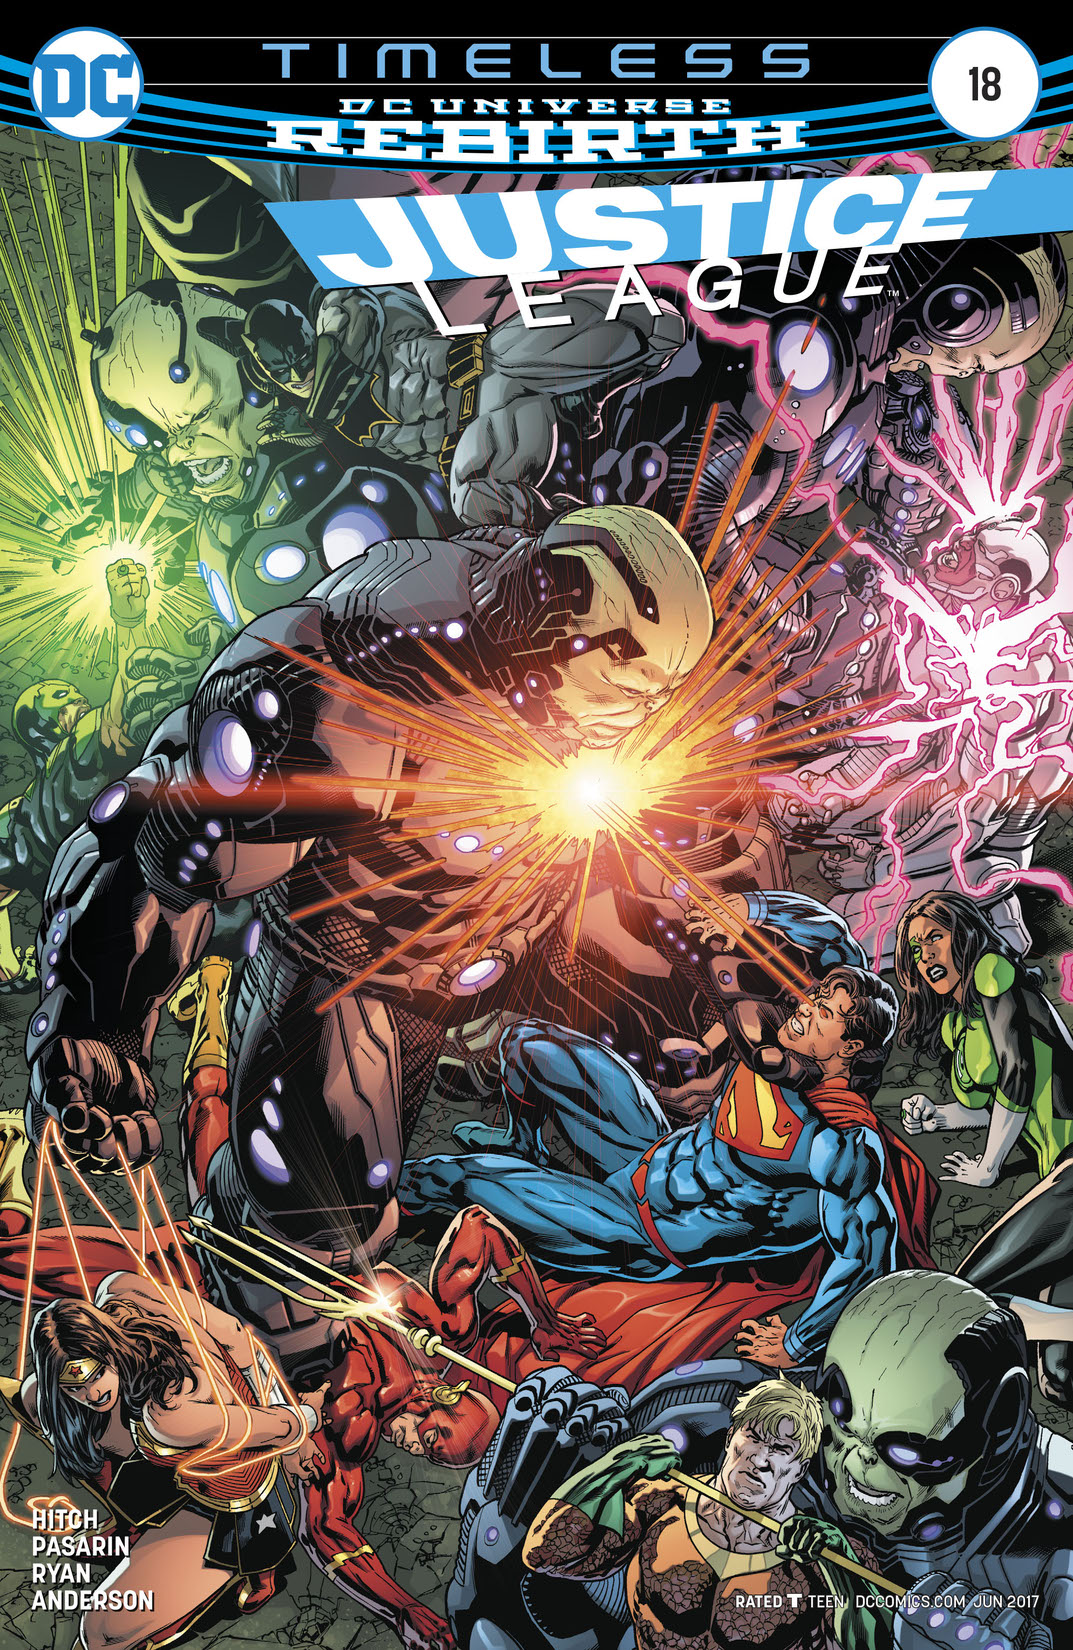 Justice League (2016-) #18 preview images